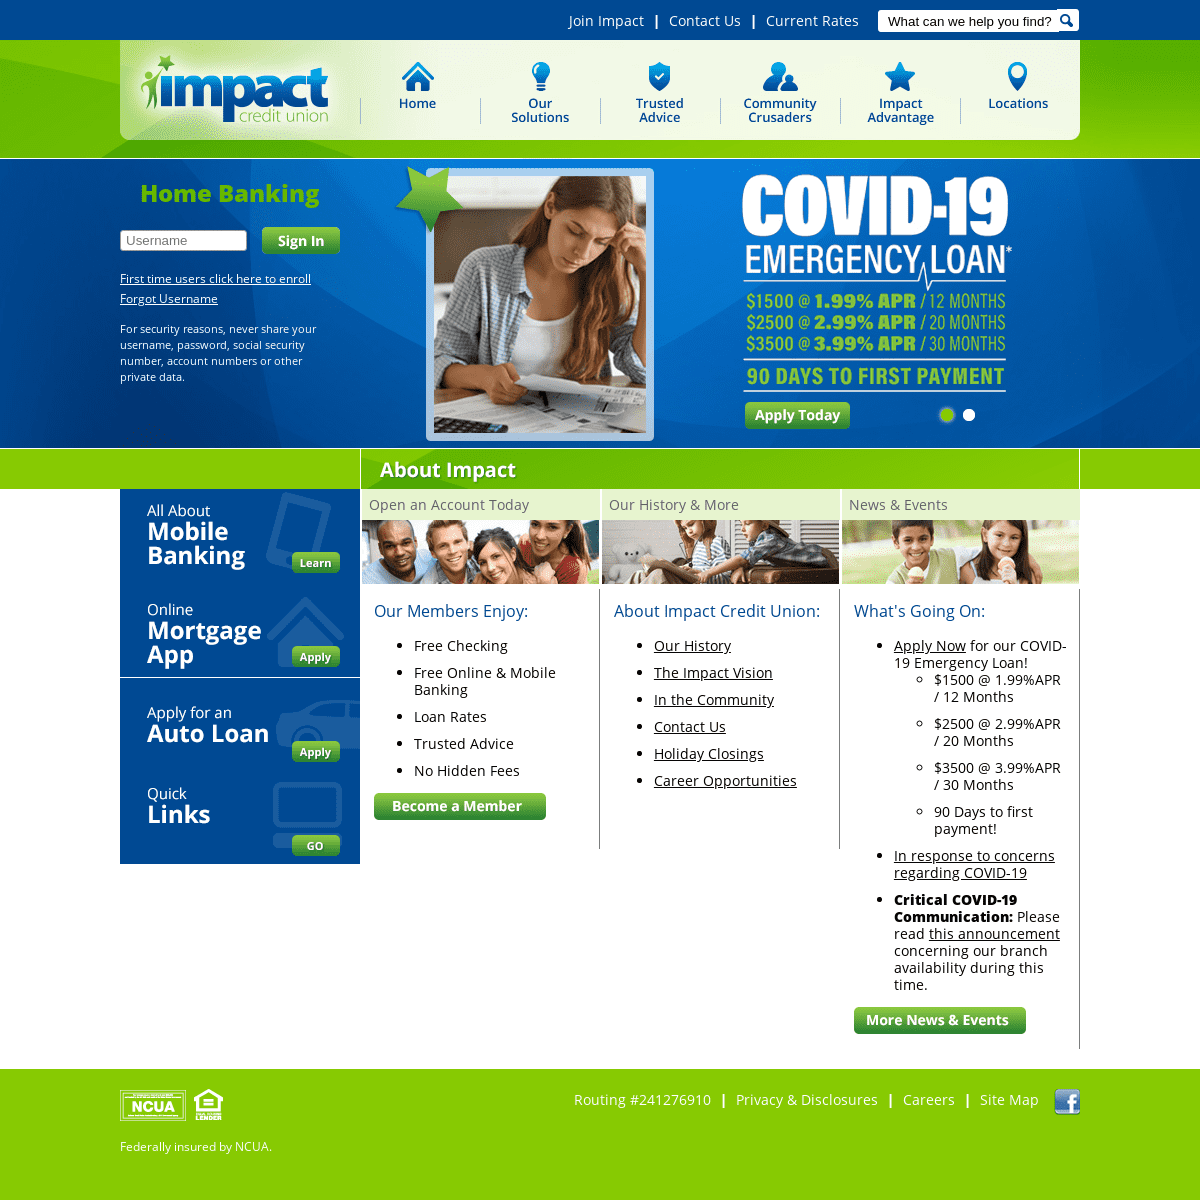 A complete backup of impactcu.org